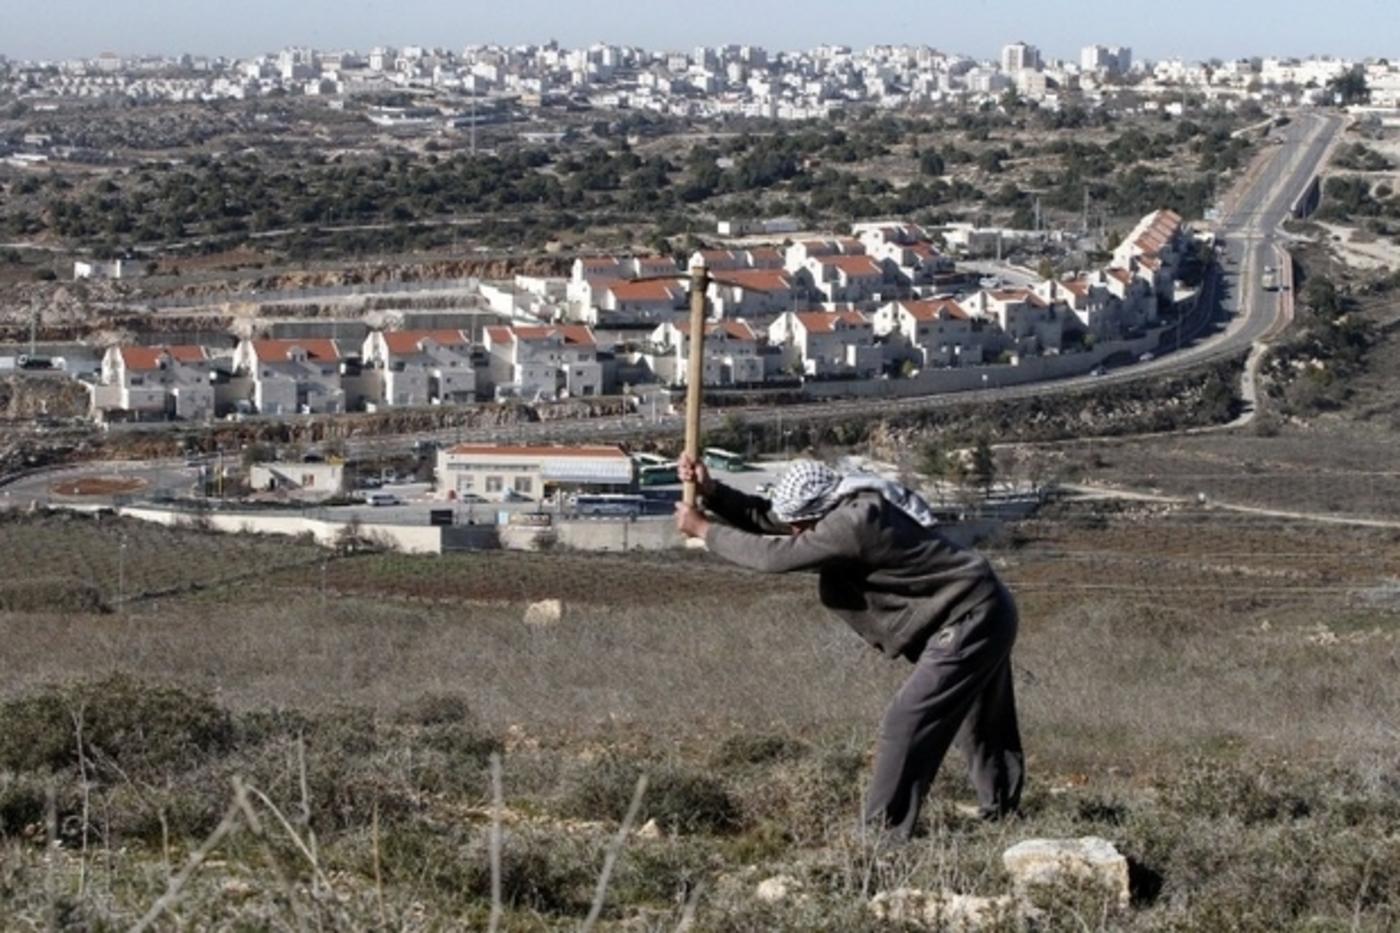 Airbnb reverses on delisting Israeli settlements, won't profit off West Bank